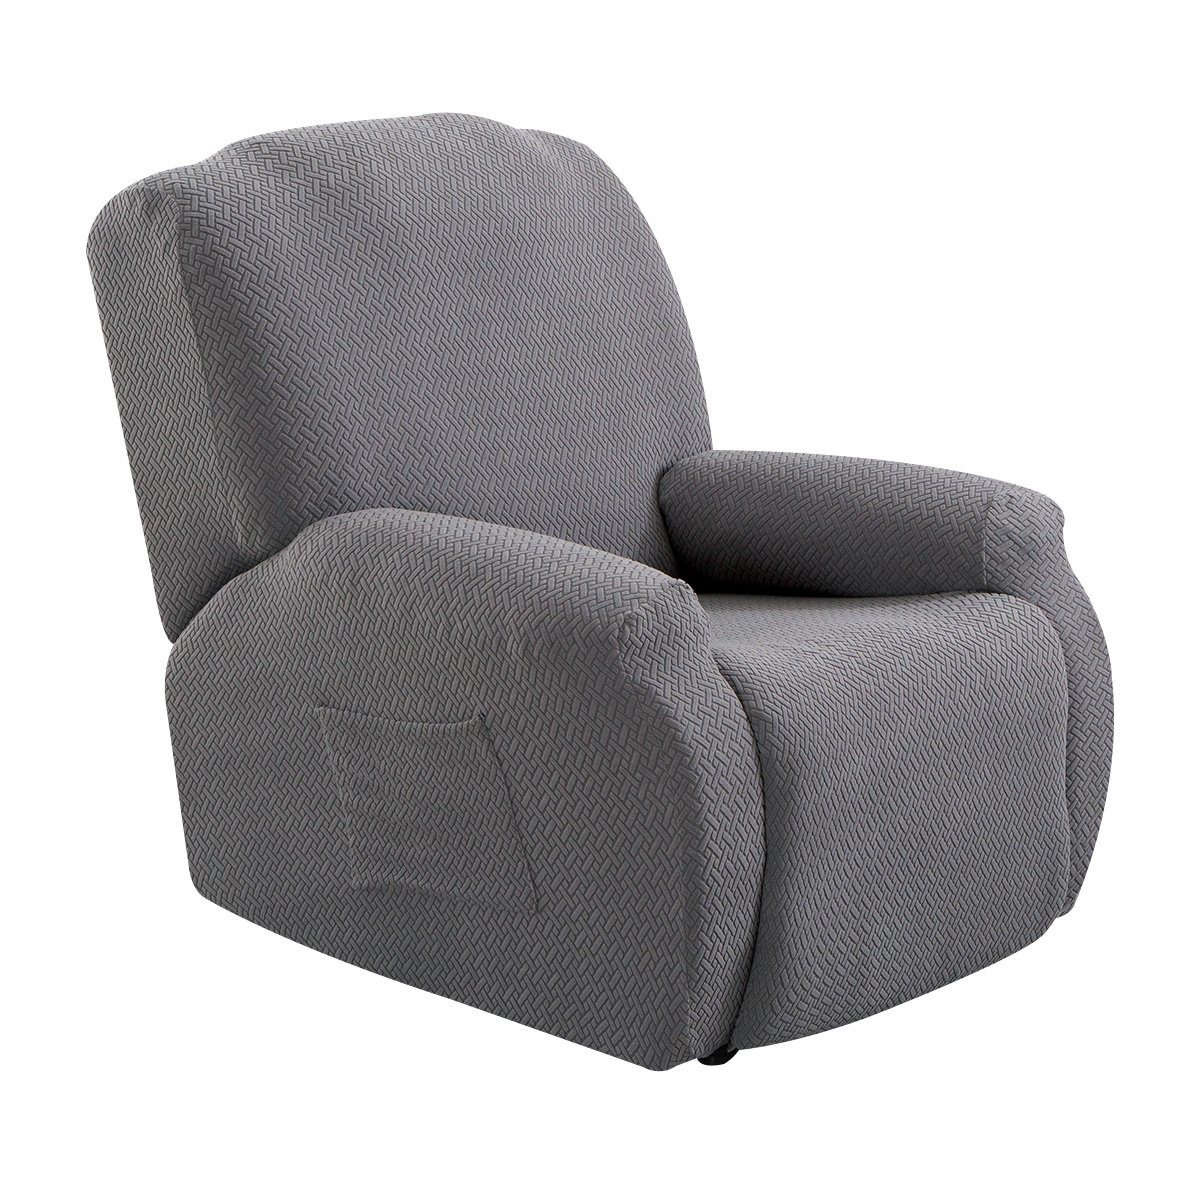 Sesselhusse Sesselbezug Stretchhusse, Relaxsessel Komplett für Liege Sessel, Rosnek, mit Strukturoptik Grau